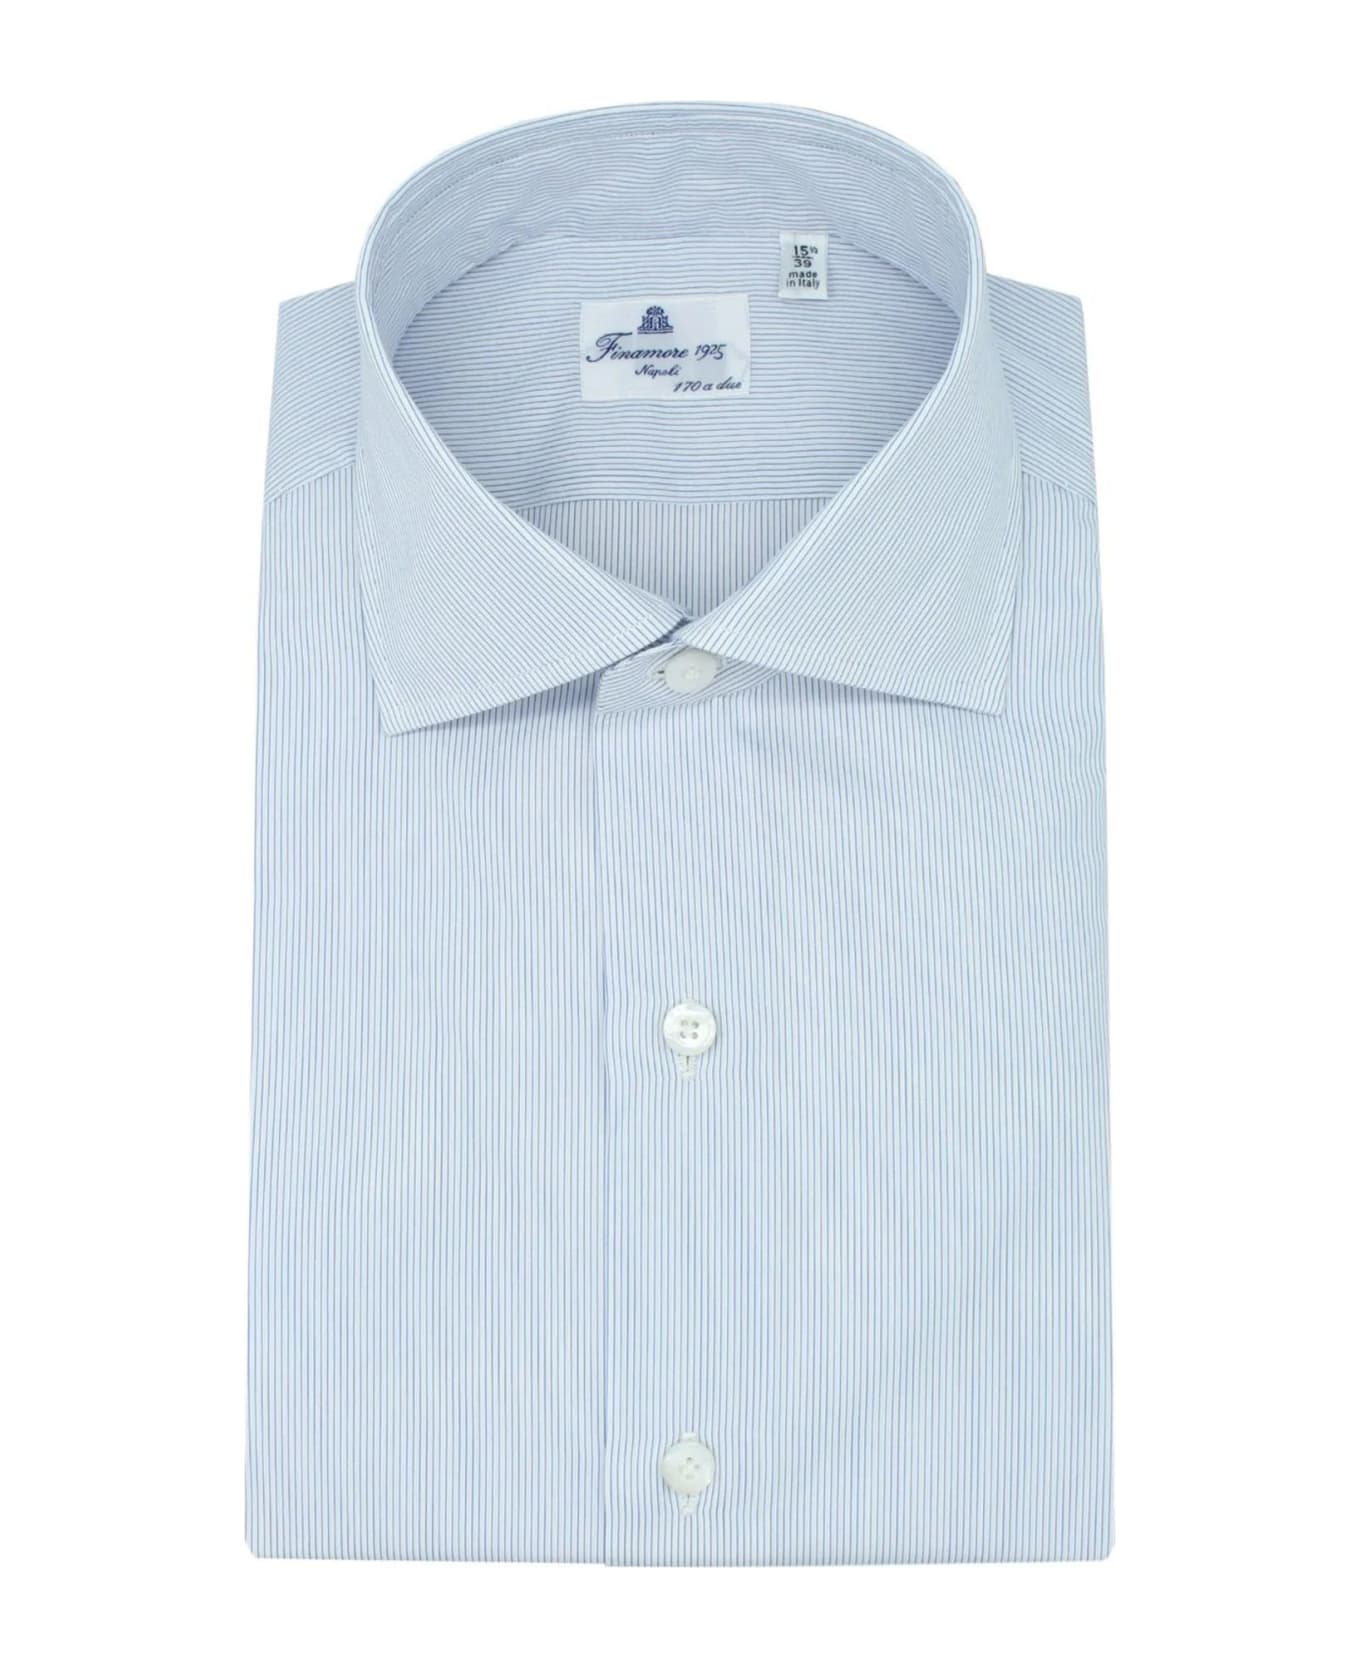 Finamore White And Blue Striped Shirt - Rigato